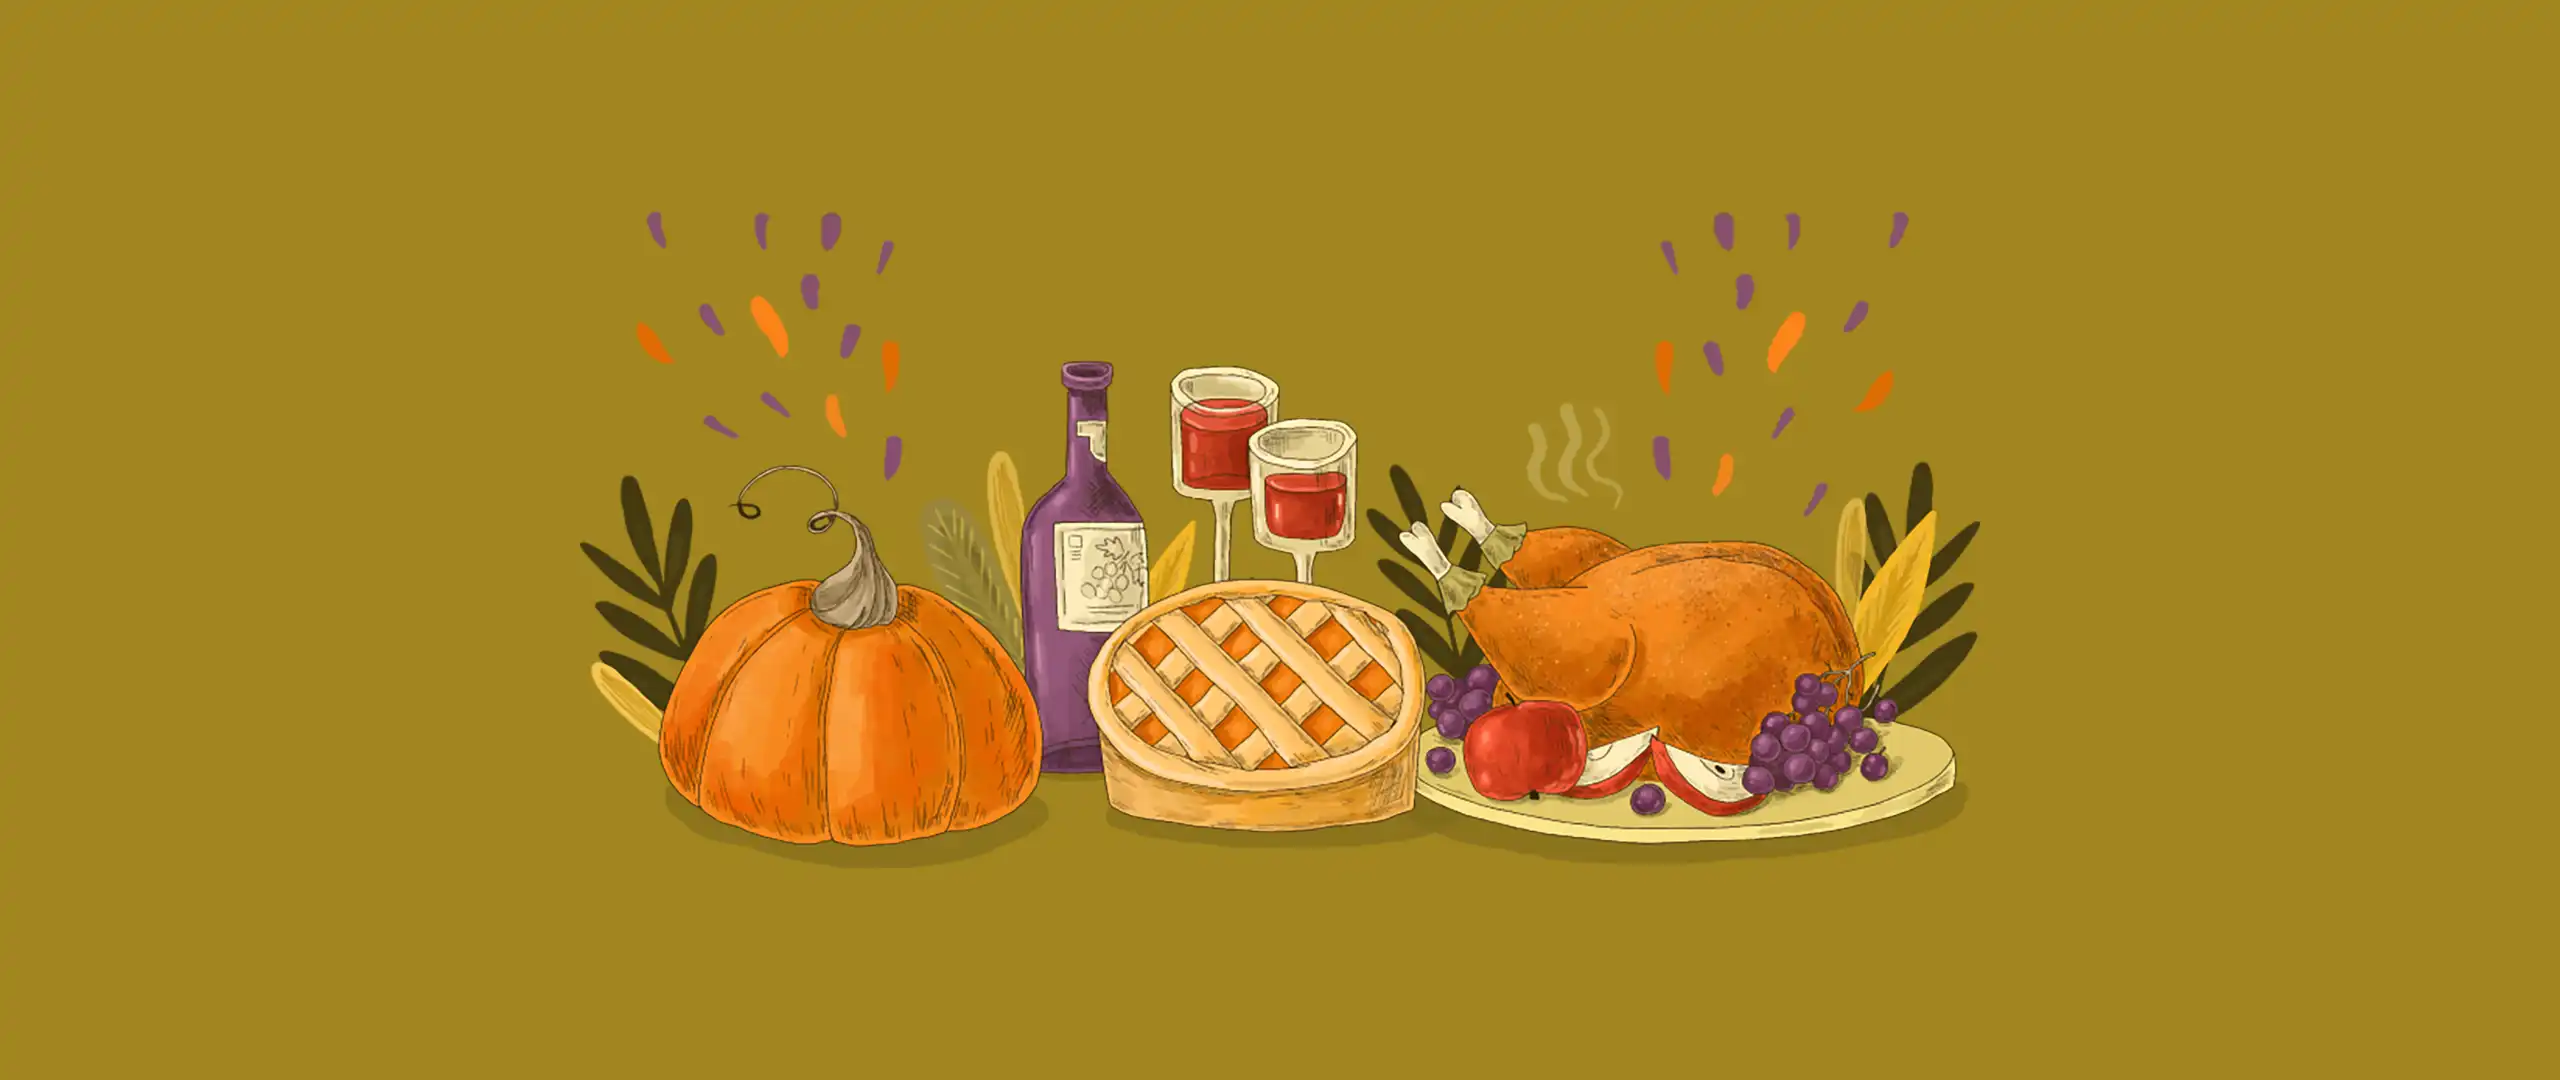 Tips For Hosting Thanksgiving Dinner & Party Ideas